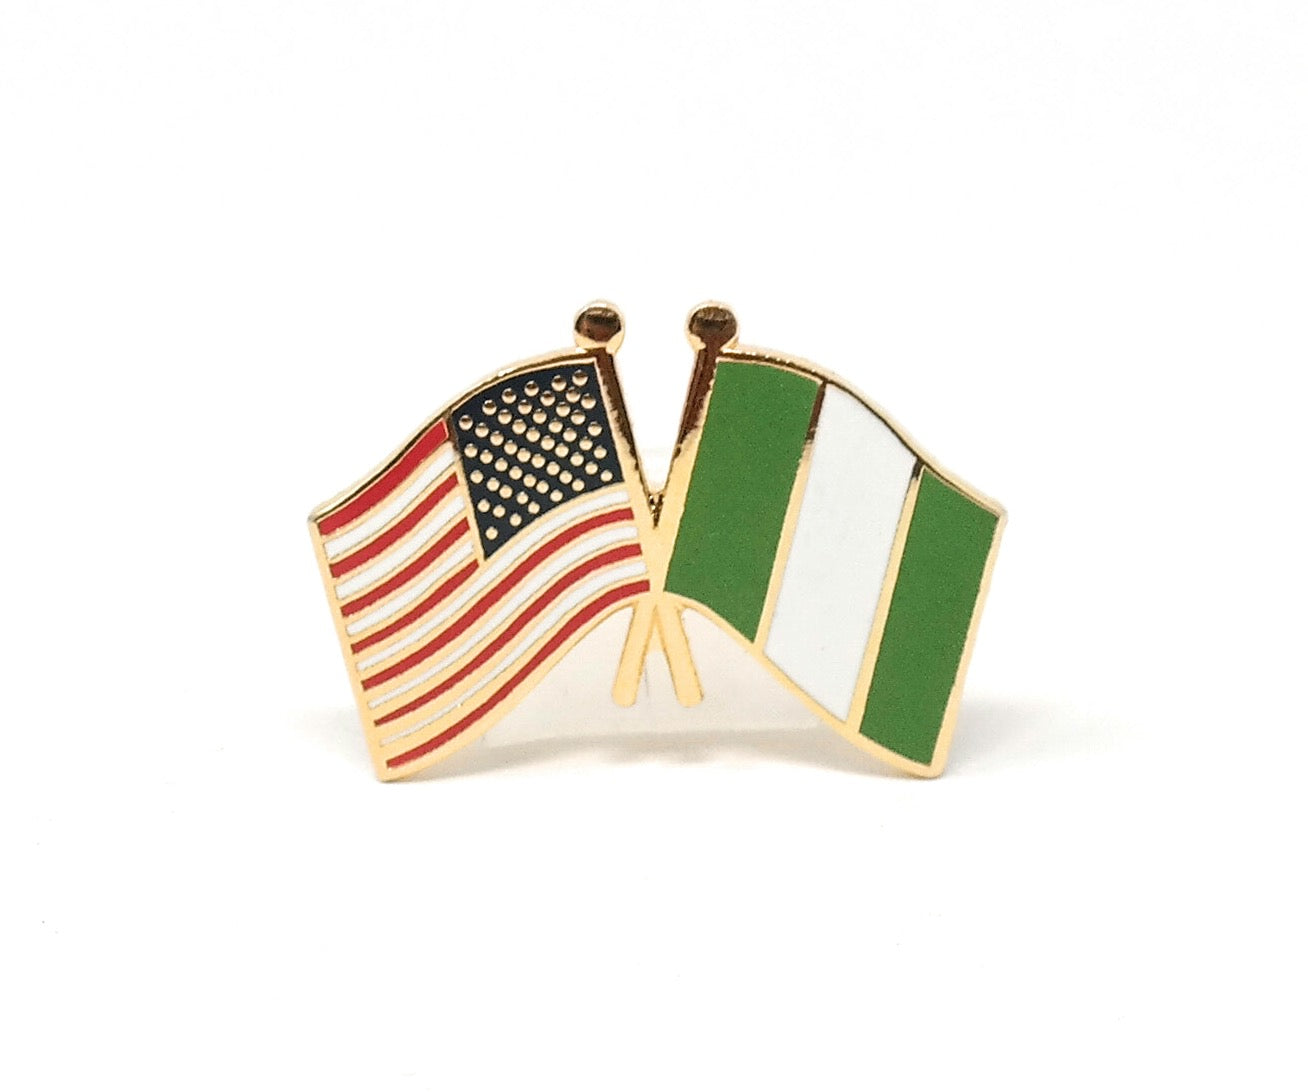 Nigeria & USA Friendship Flags Lapel Pin